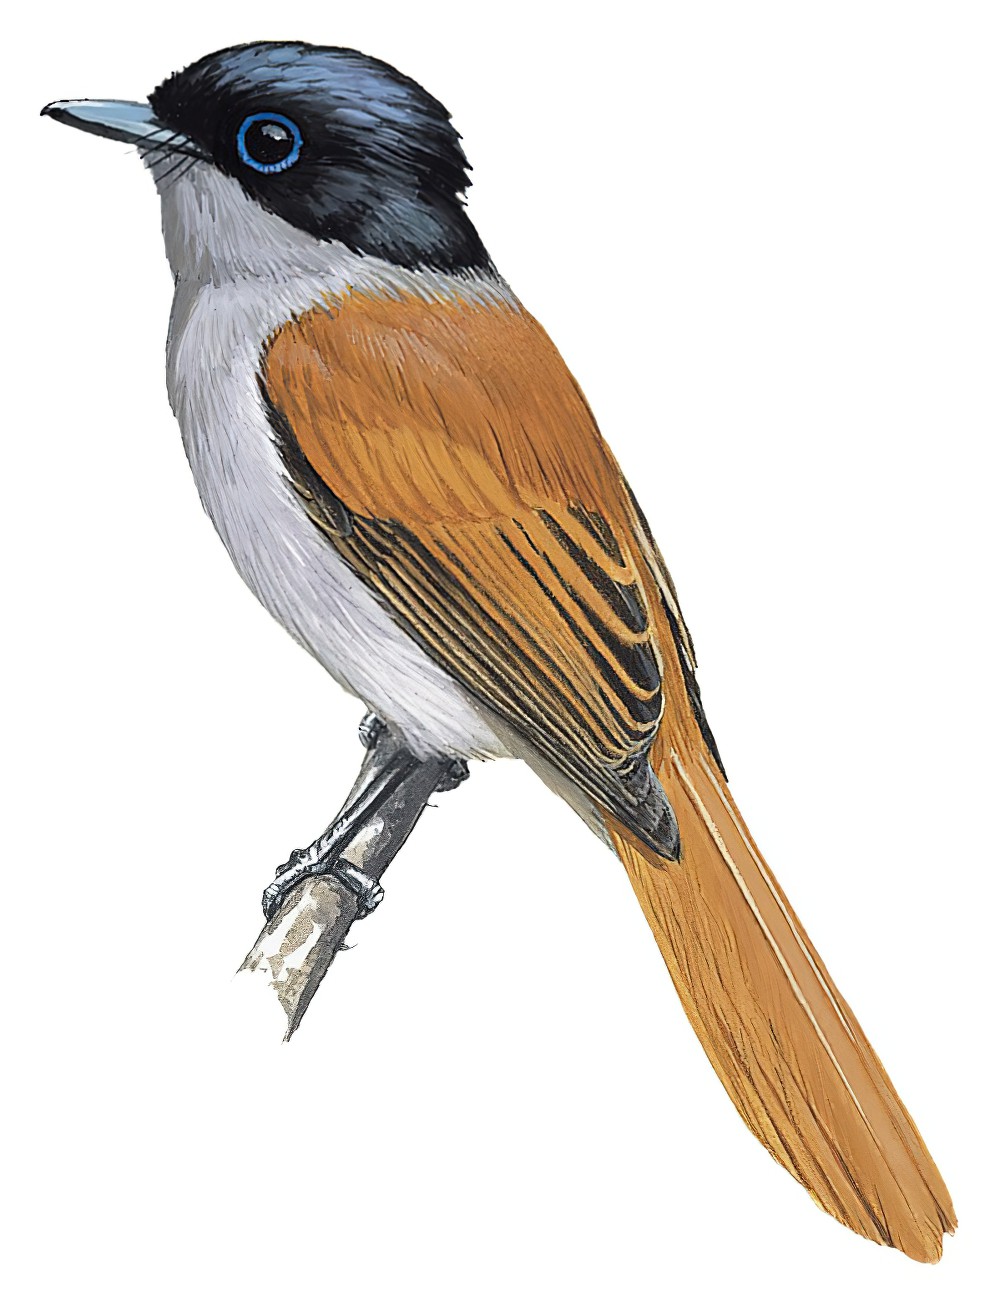 Mascarene Paradise-Flycatcher / Terpsiphone bourbonnensis